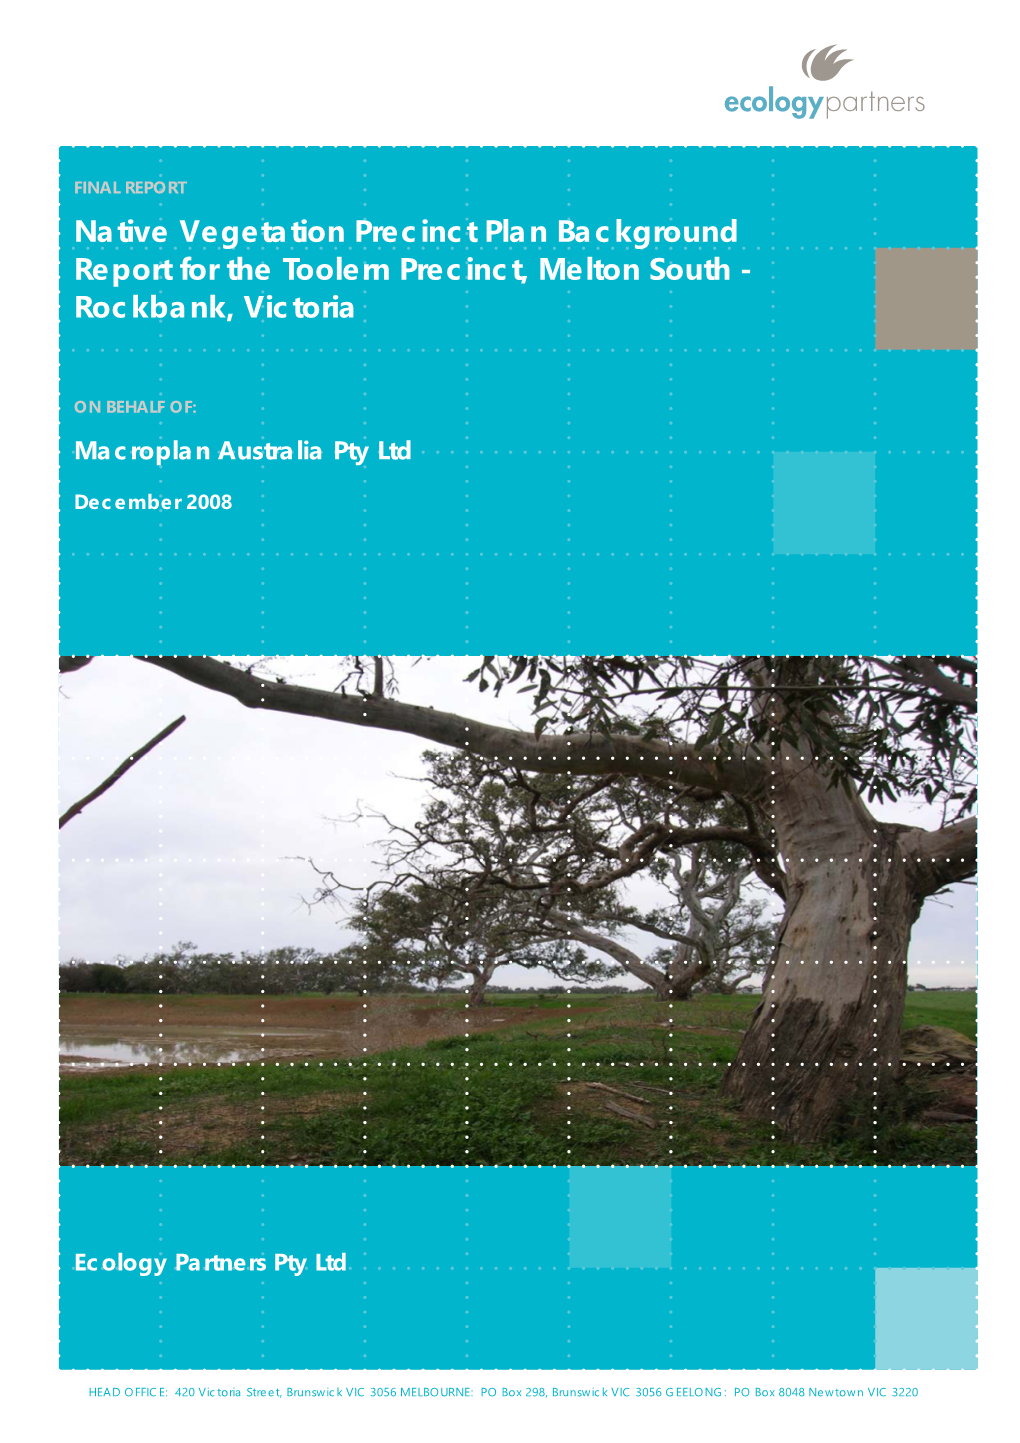 Native Vegetation Precinct Plan Background Report for the Toolern Precinct, Melton South - Rockbank, Victoria